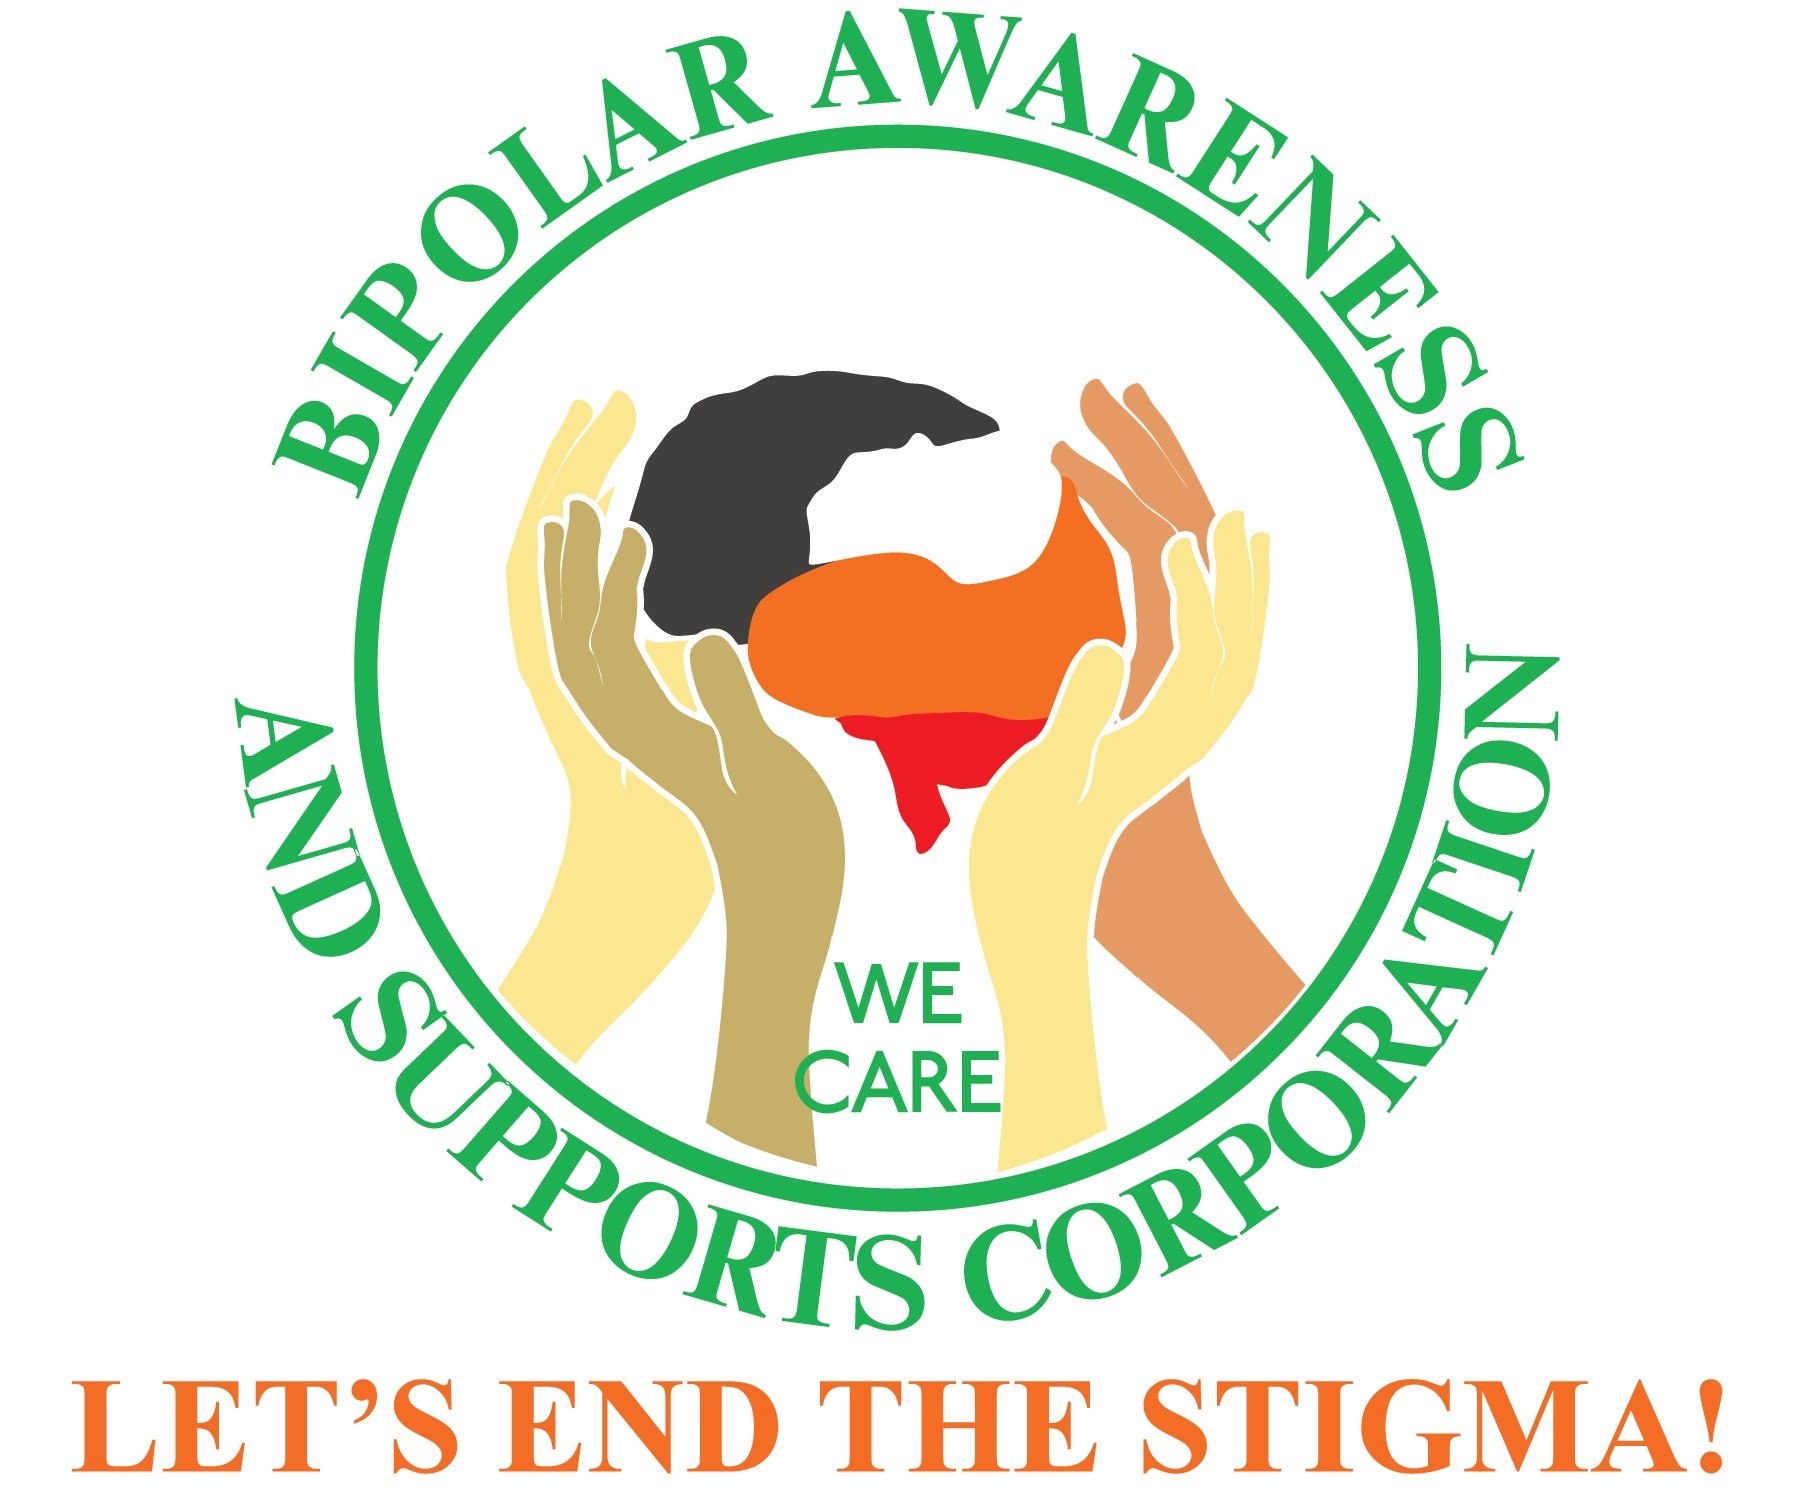 Bipolar Awareness and Supports Corporation